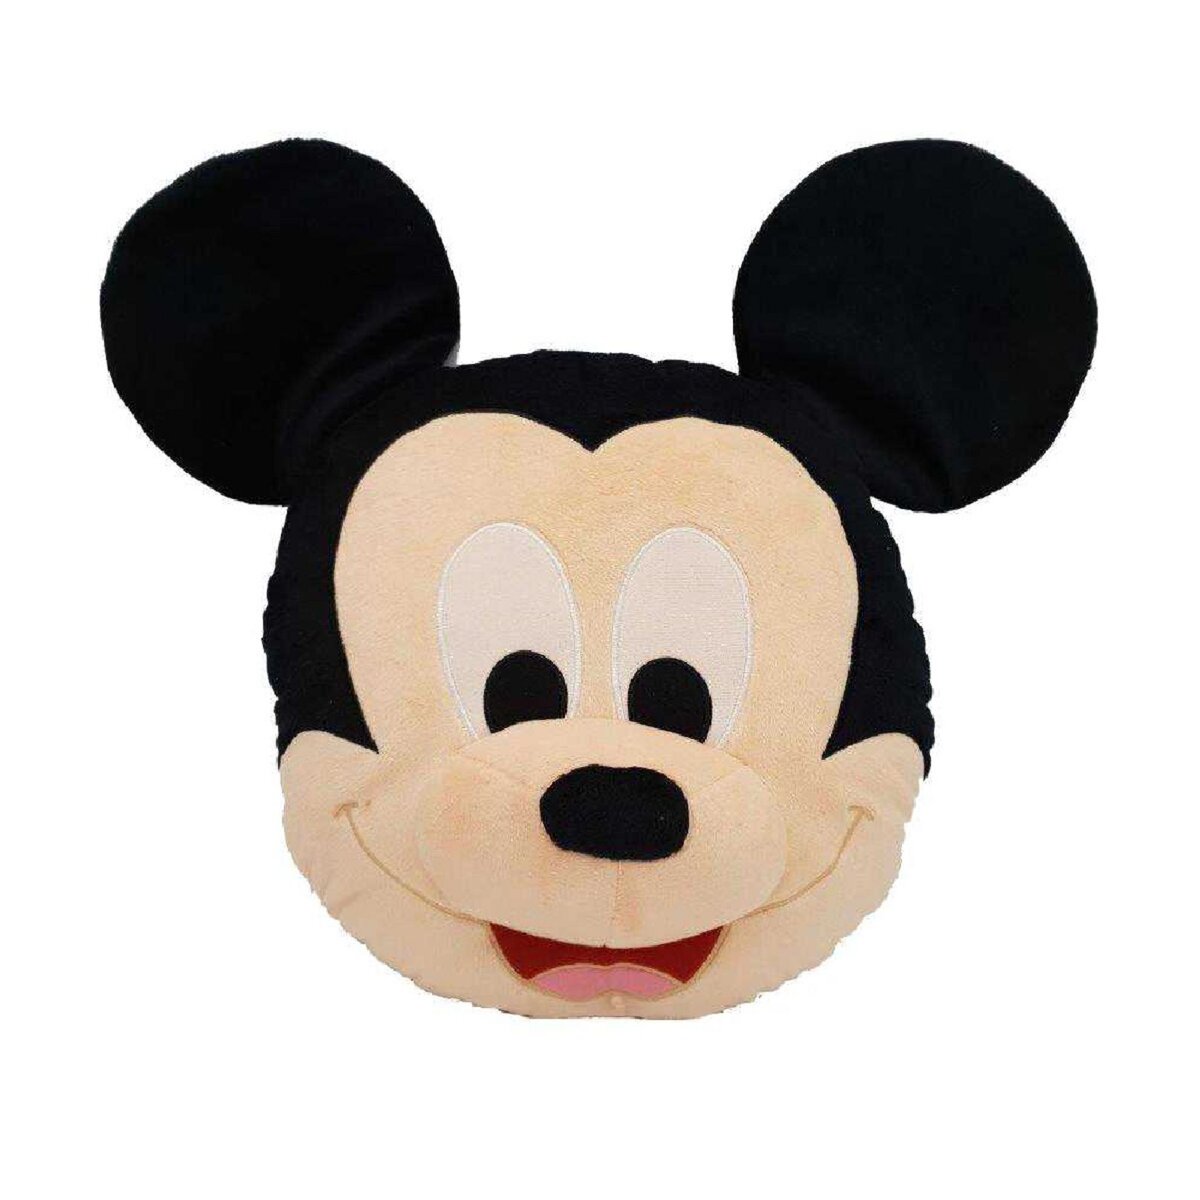 Coussin peluche 3D en forme de tête de Mickey